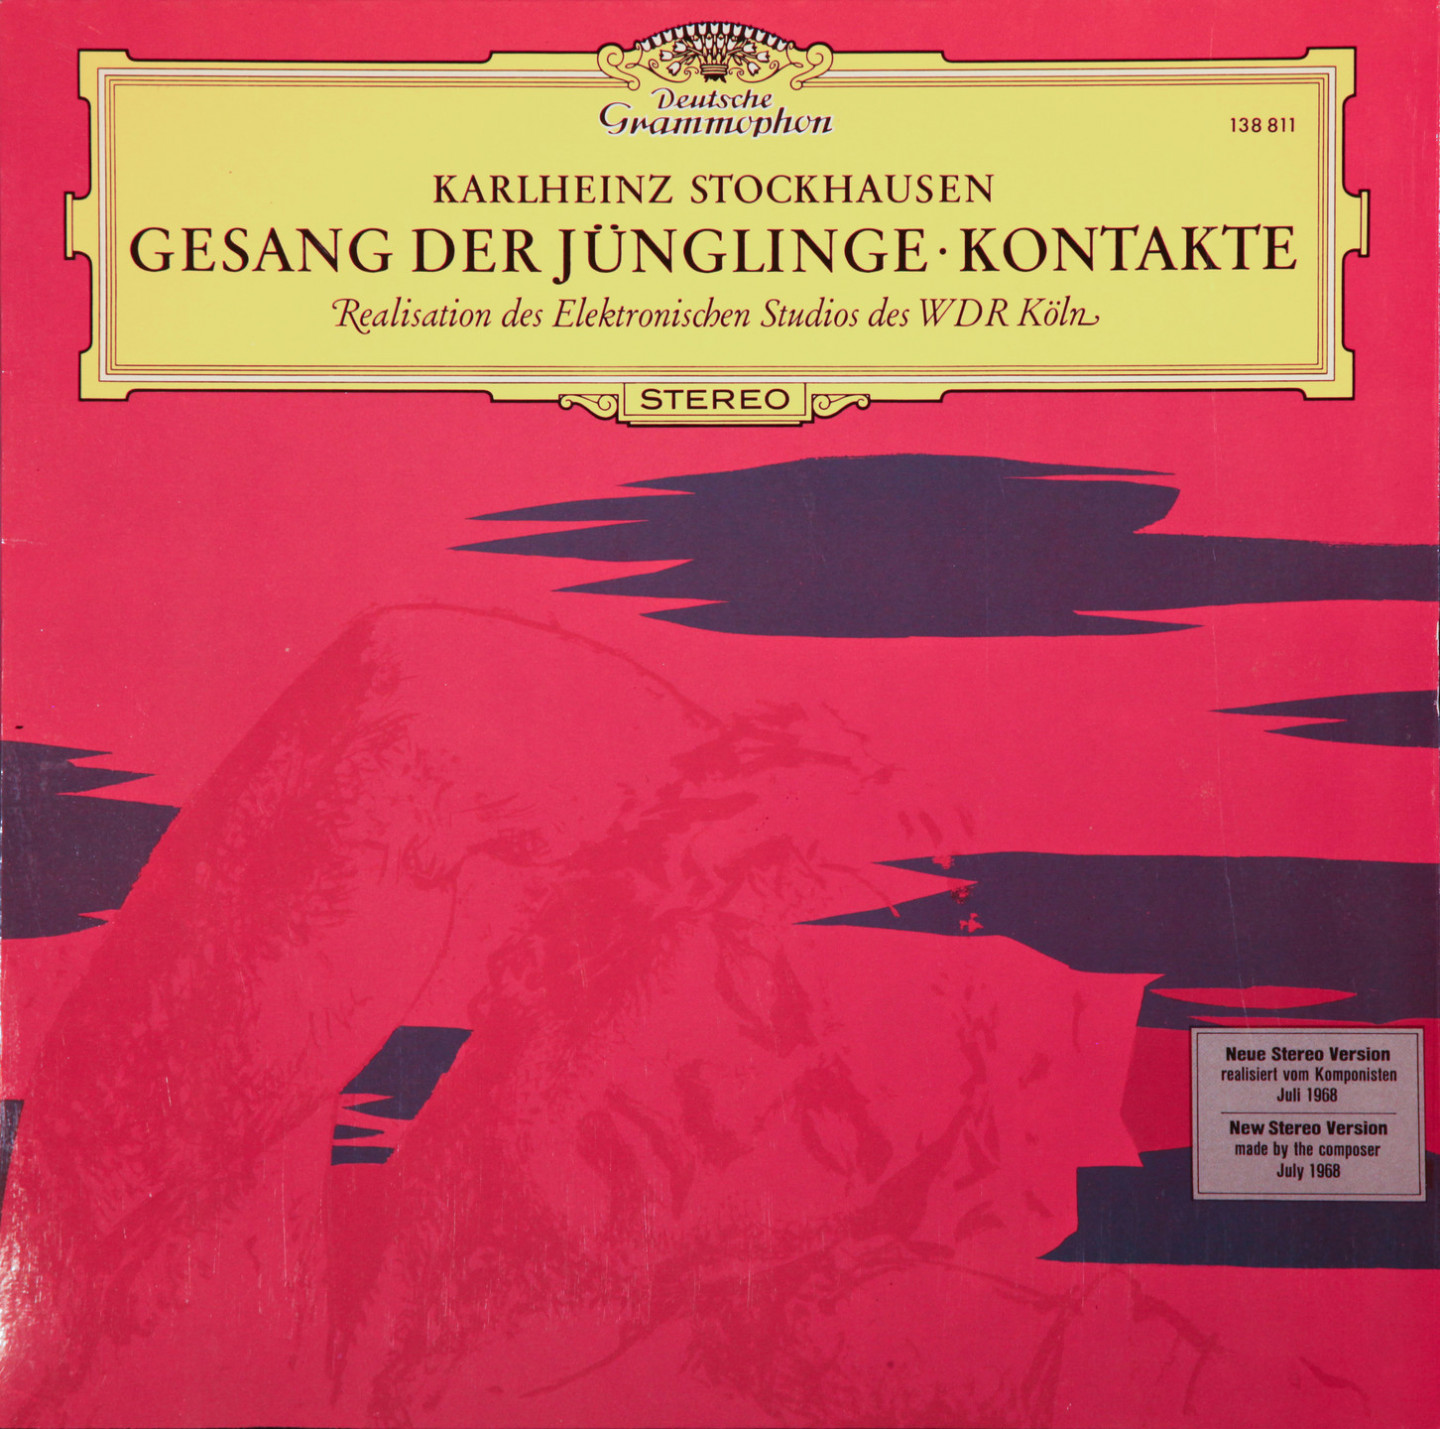 Gesang der Jünglinge — Kontakte — Karlheinz Stockhausen — Deutsche  Grammophon — electrocd — The electroacoustic music store